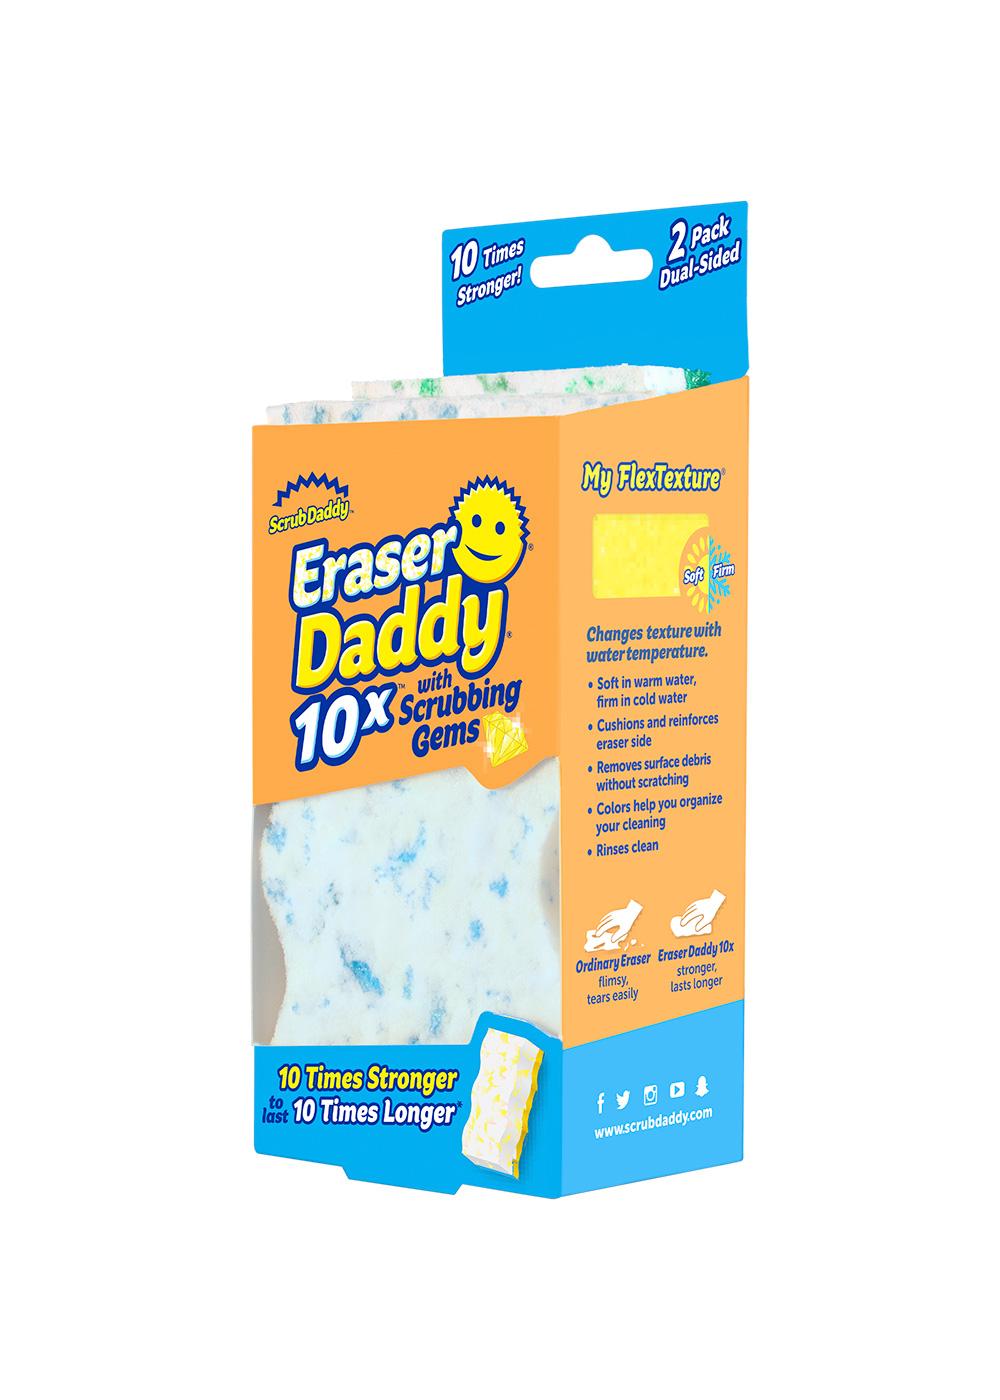  Scrub Daddy Eraser Sheets - Eraser Daddy 10x